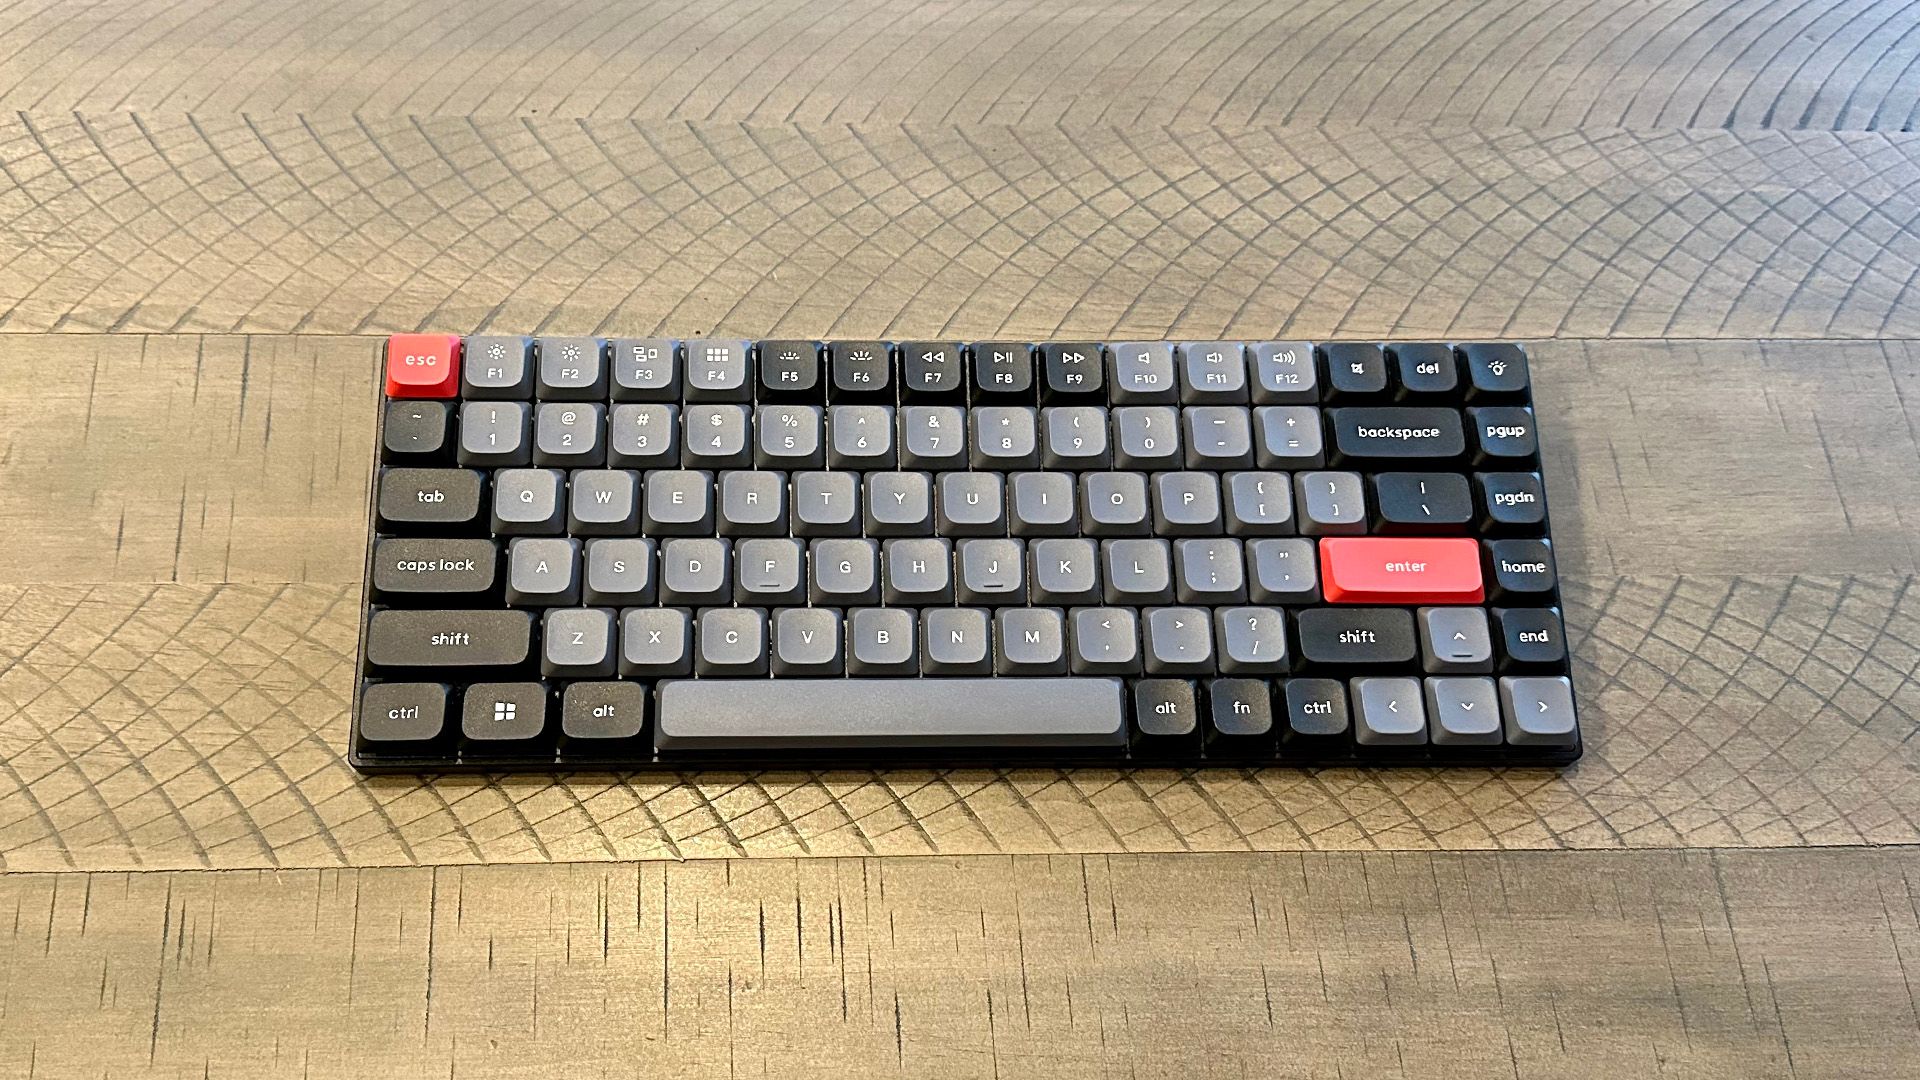 Keychron S1 keyboard on a table